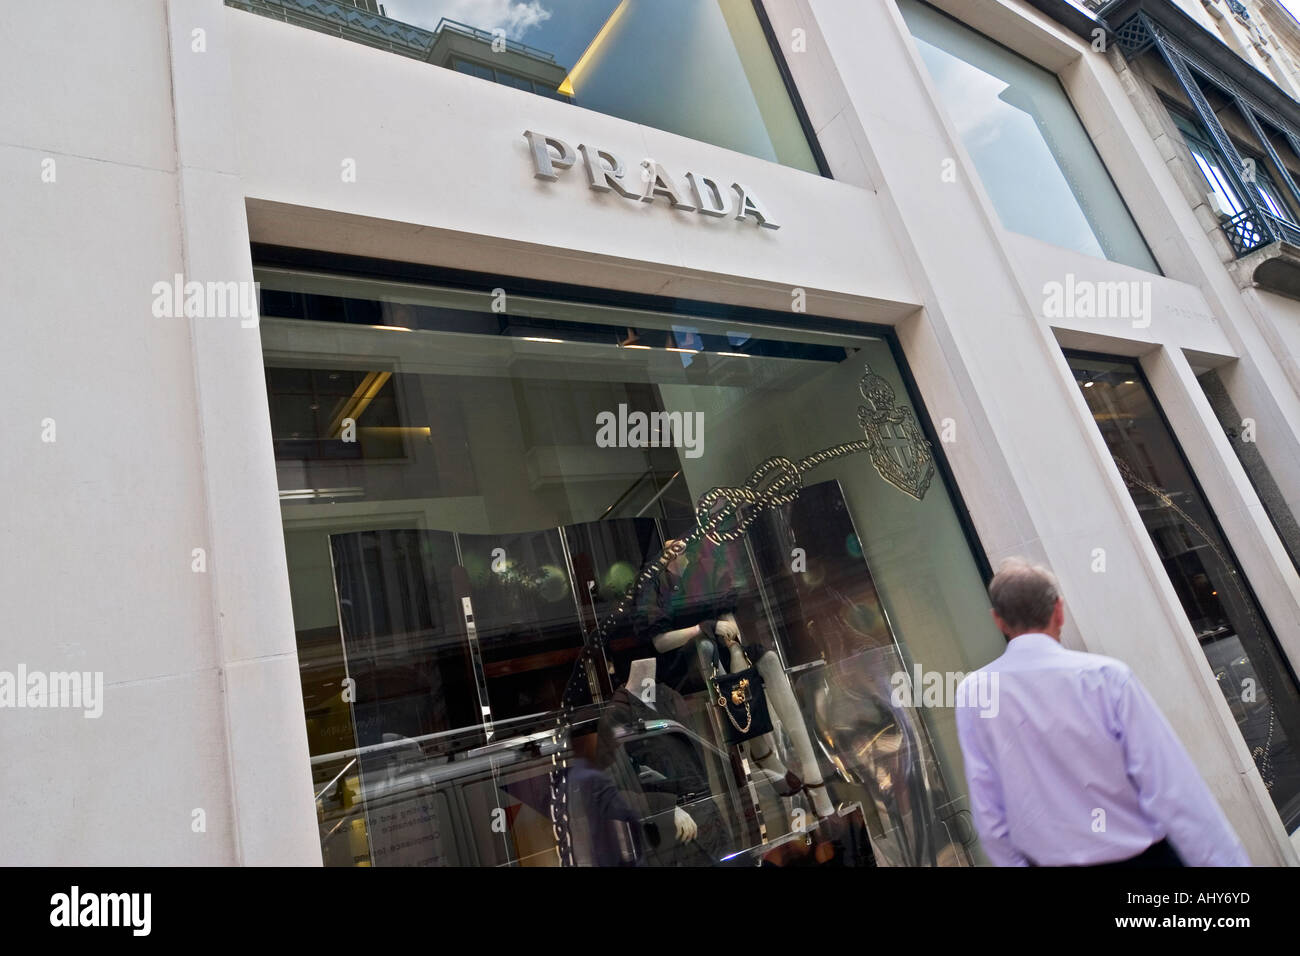 Prada bond street hi-res stock photography and images - Alamy